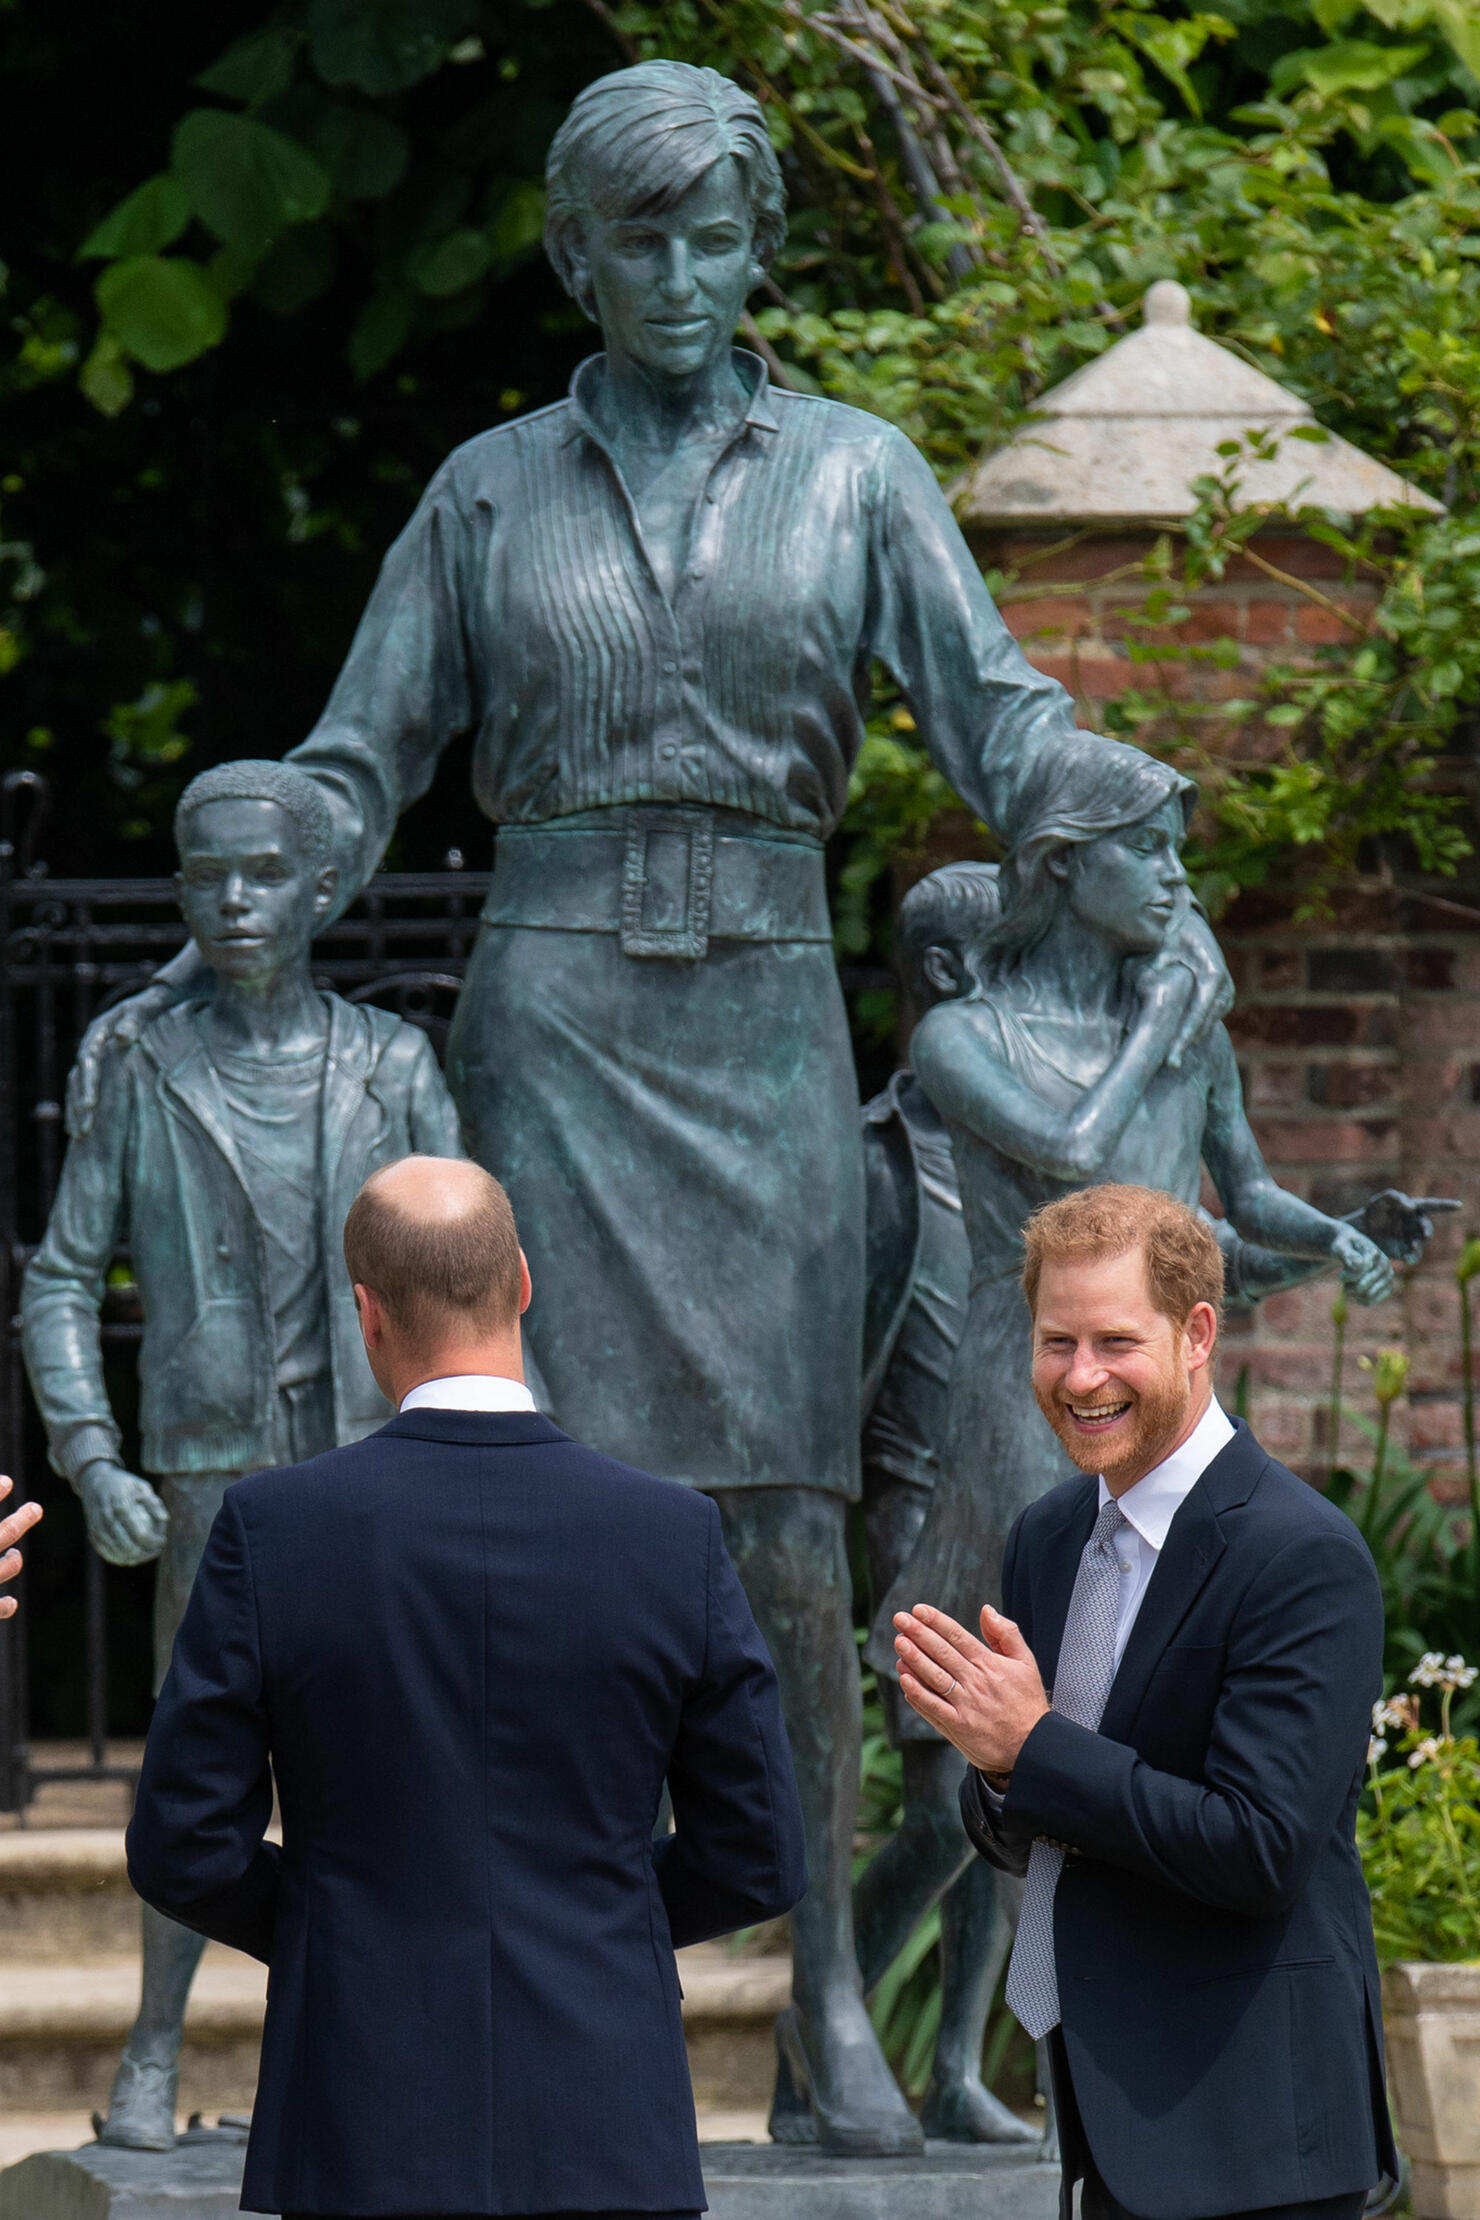 Diana, Princess Of Wales Statue Unveiling At Kensington Palace